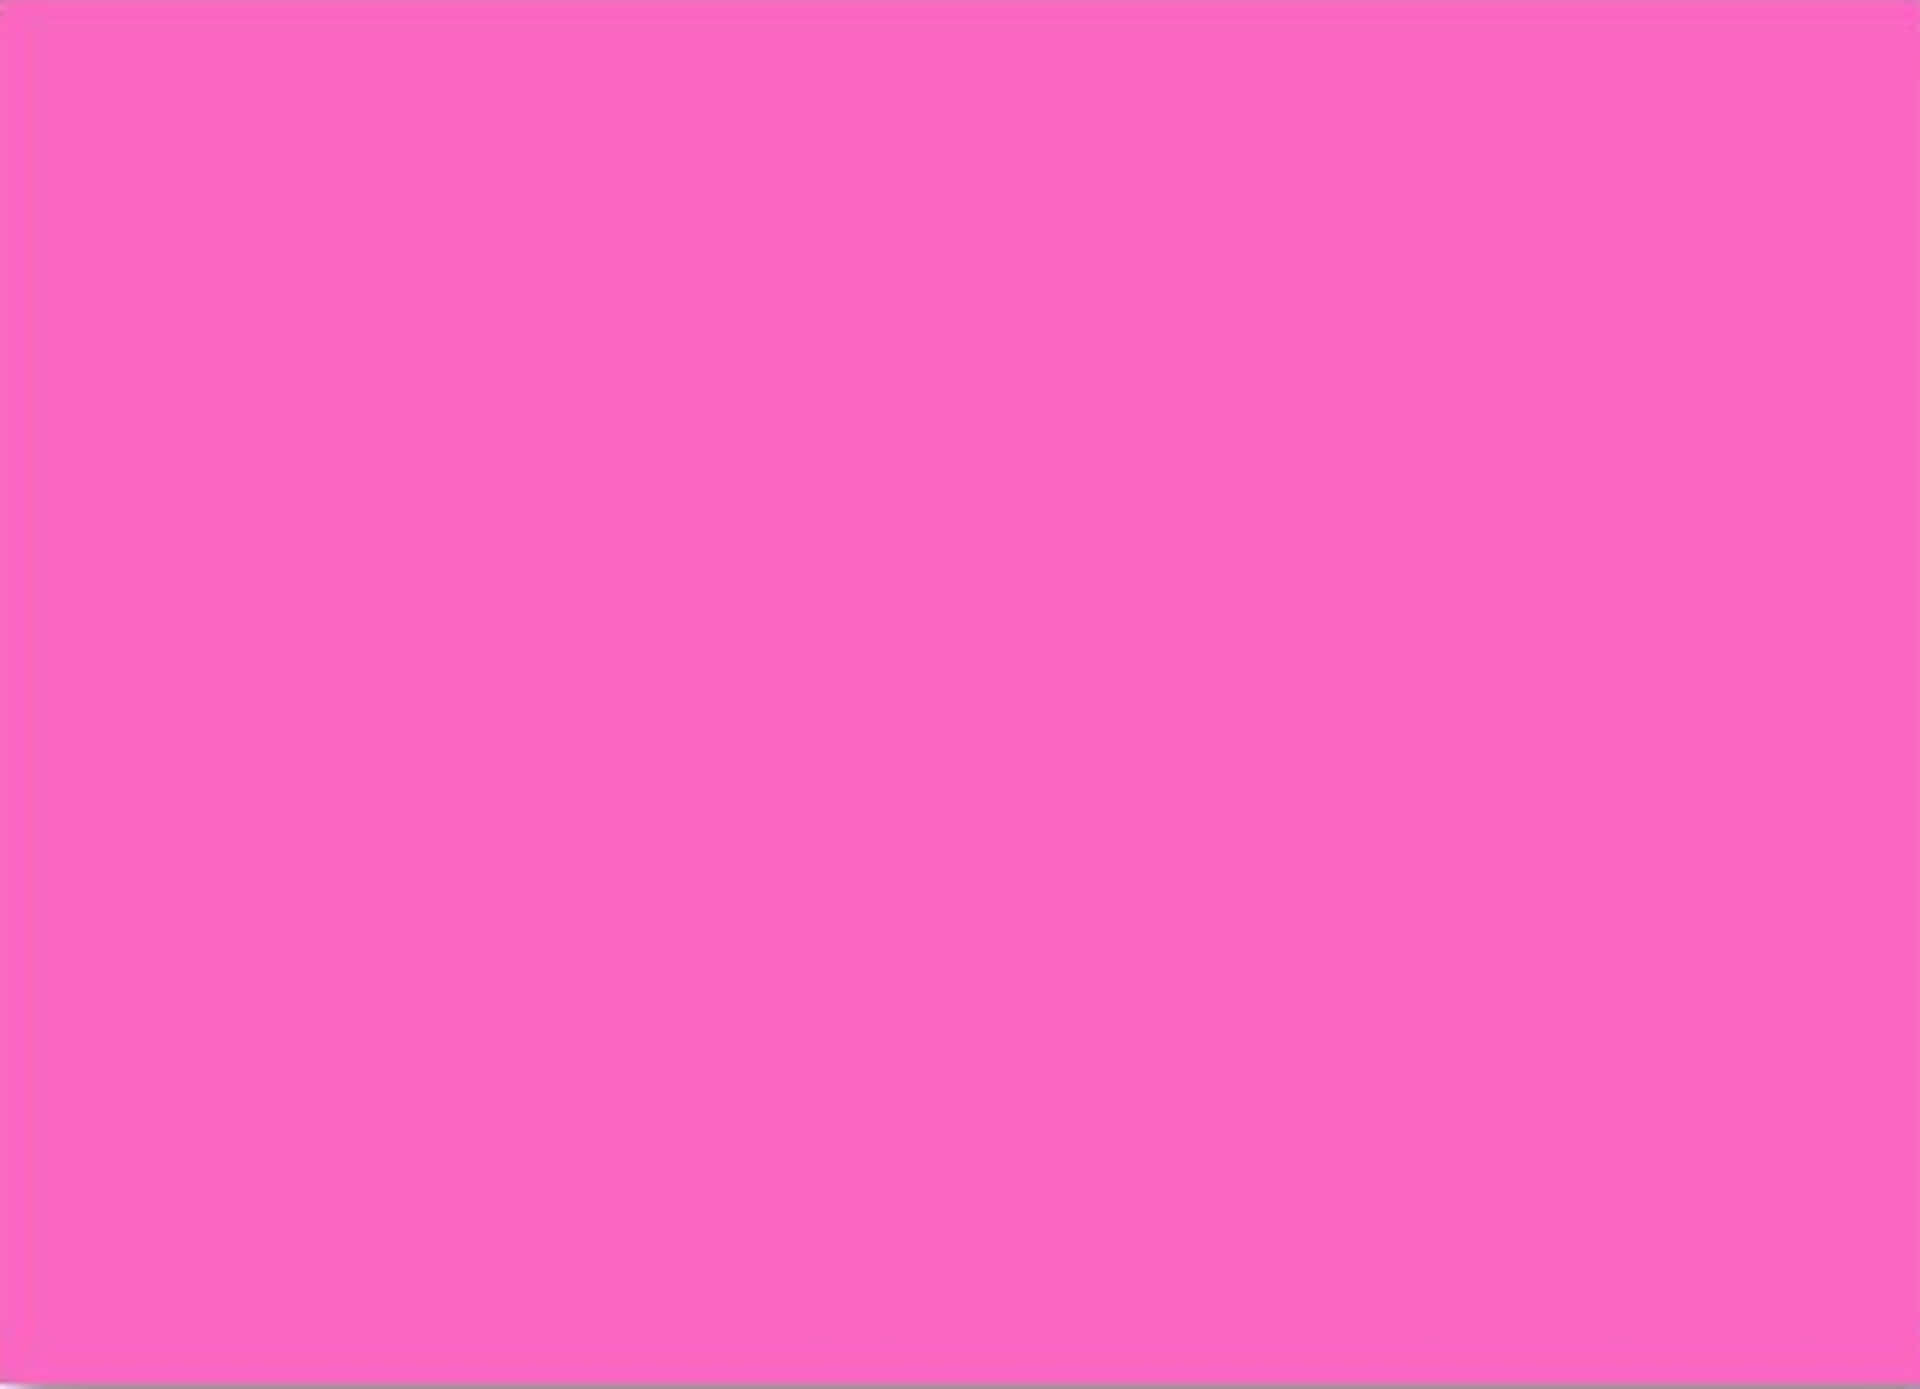 Vibrant Bright Pink Background